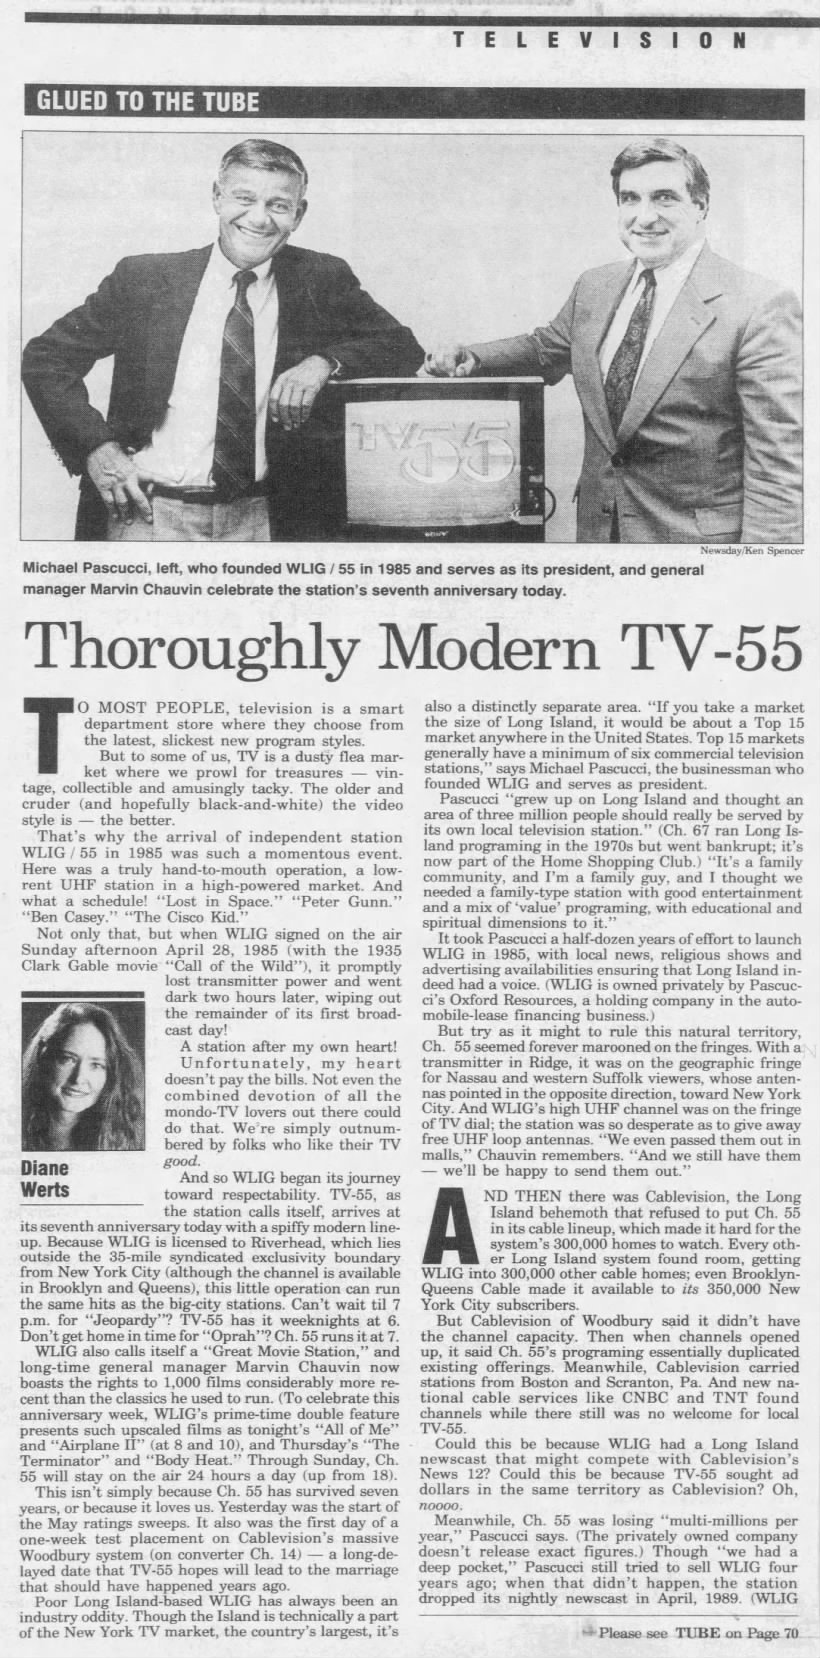 Thoroughly Modern TV-55